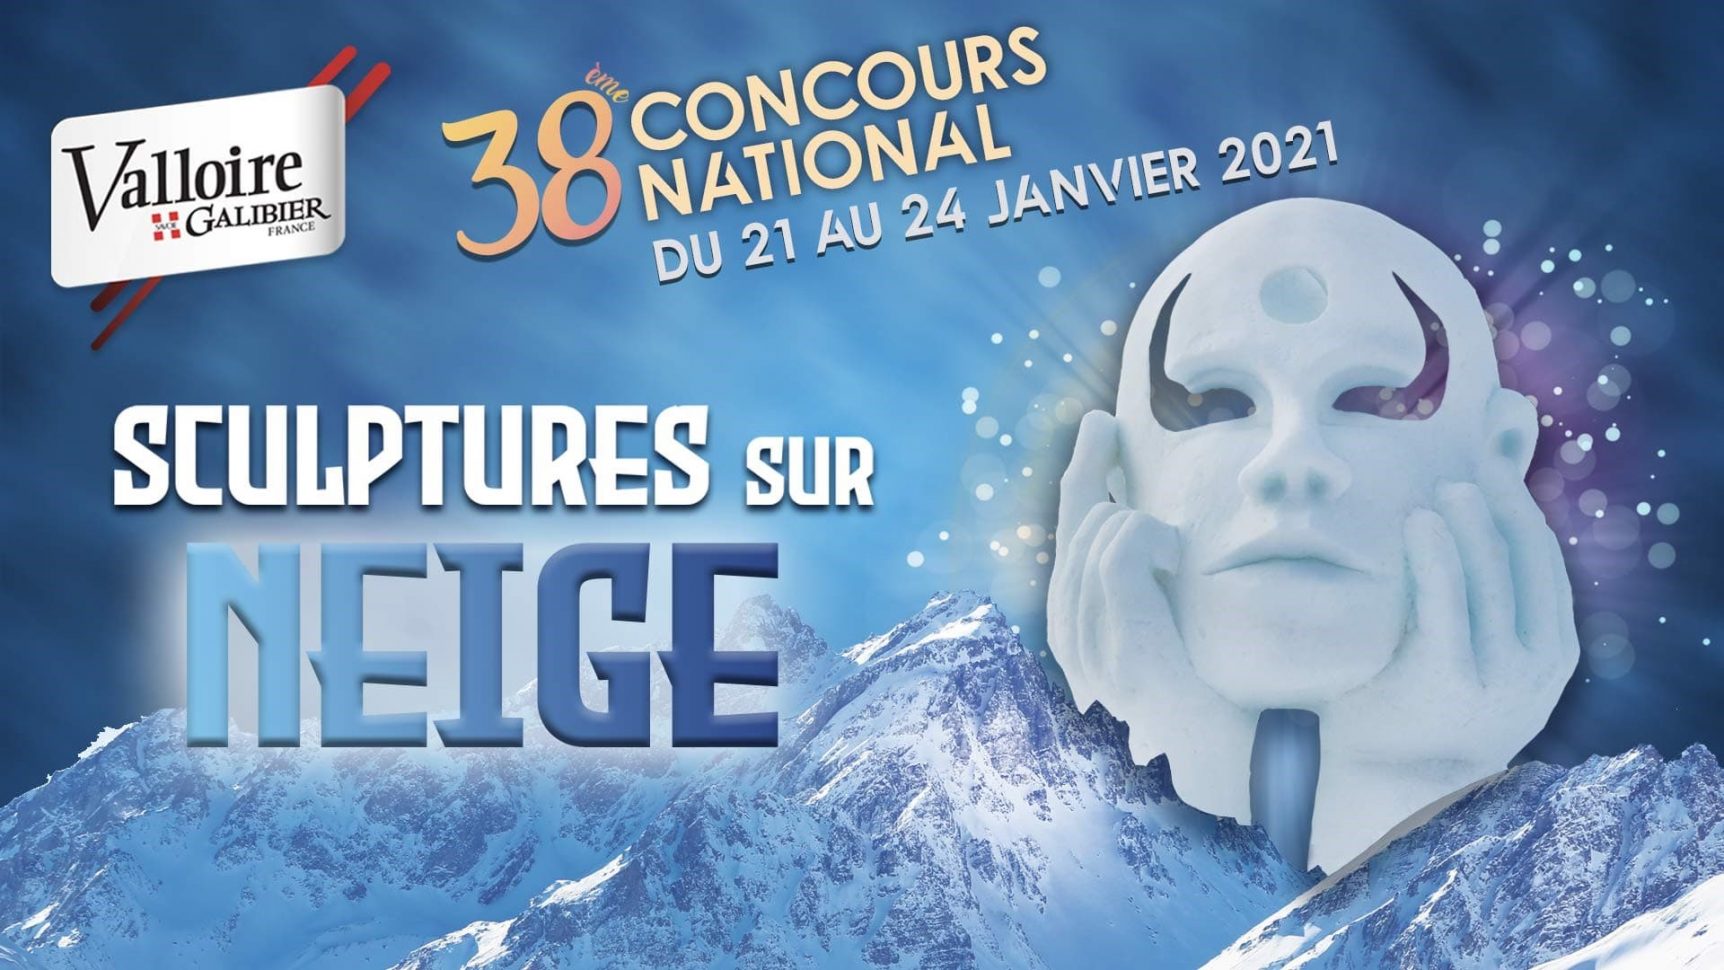 affiche-concours-neige-valloire-2021.jpg